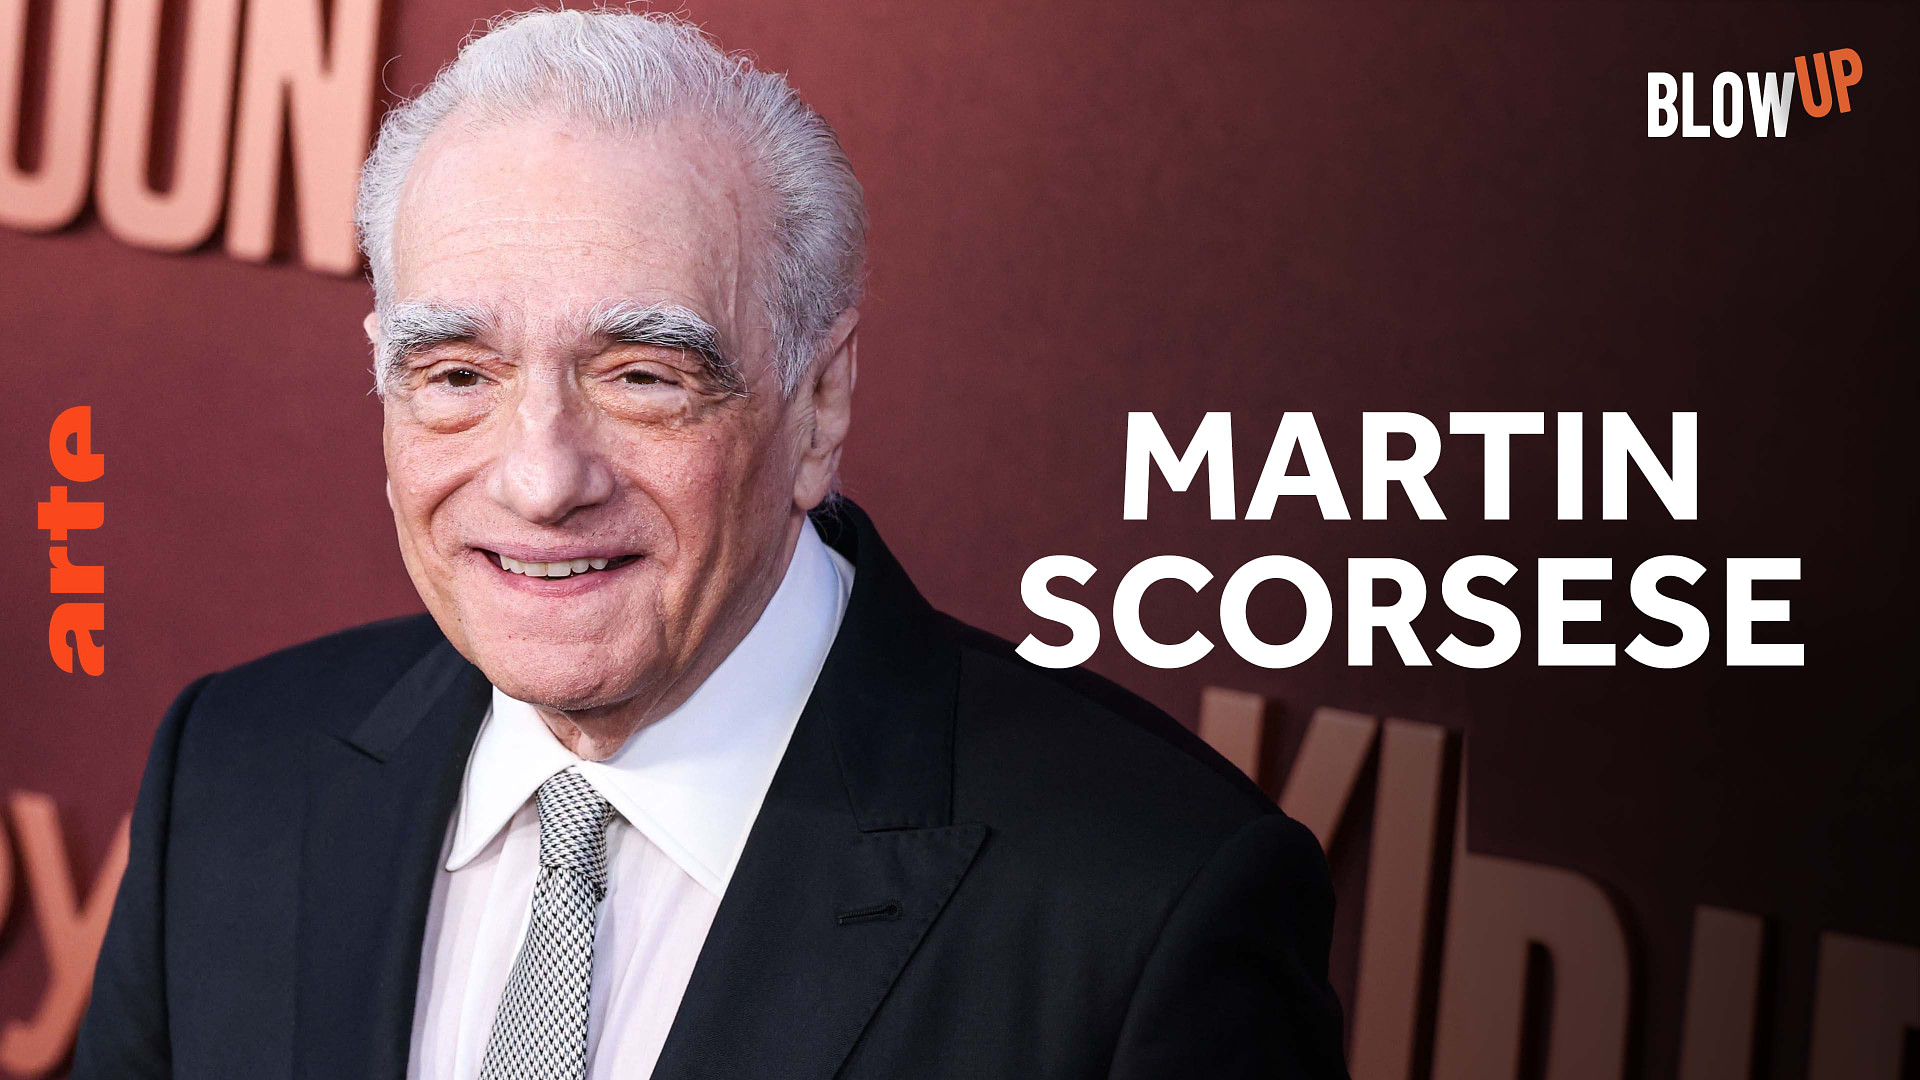 Blow up - Martin Scorsese in 10 Minuten